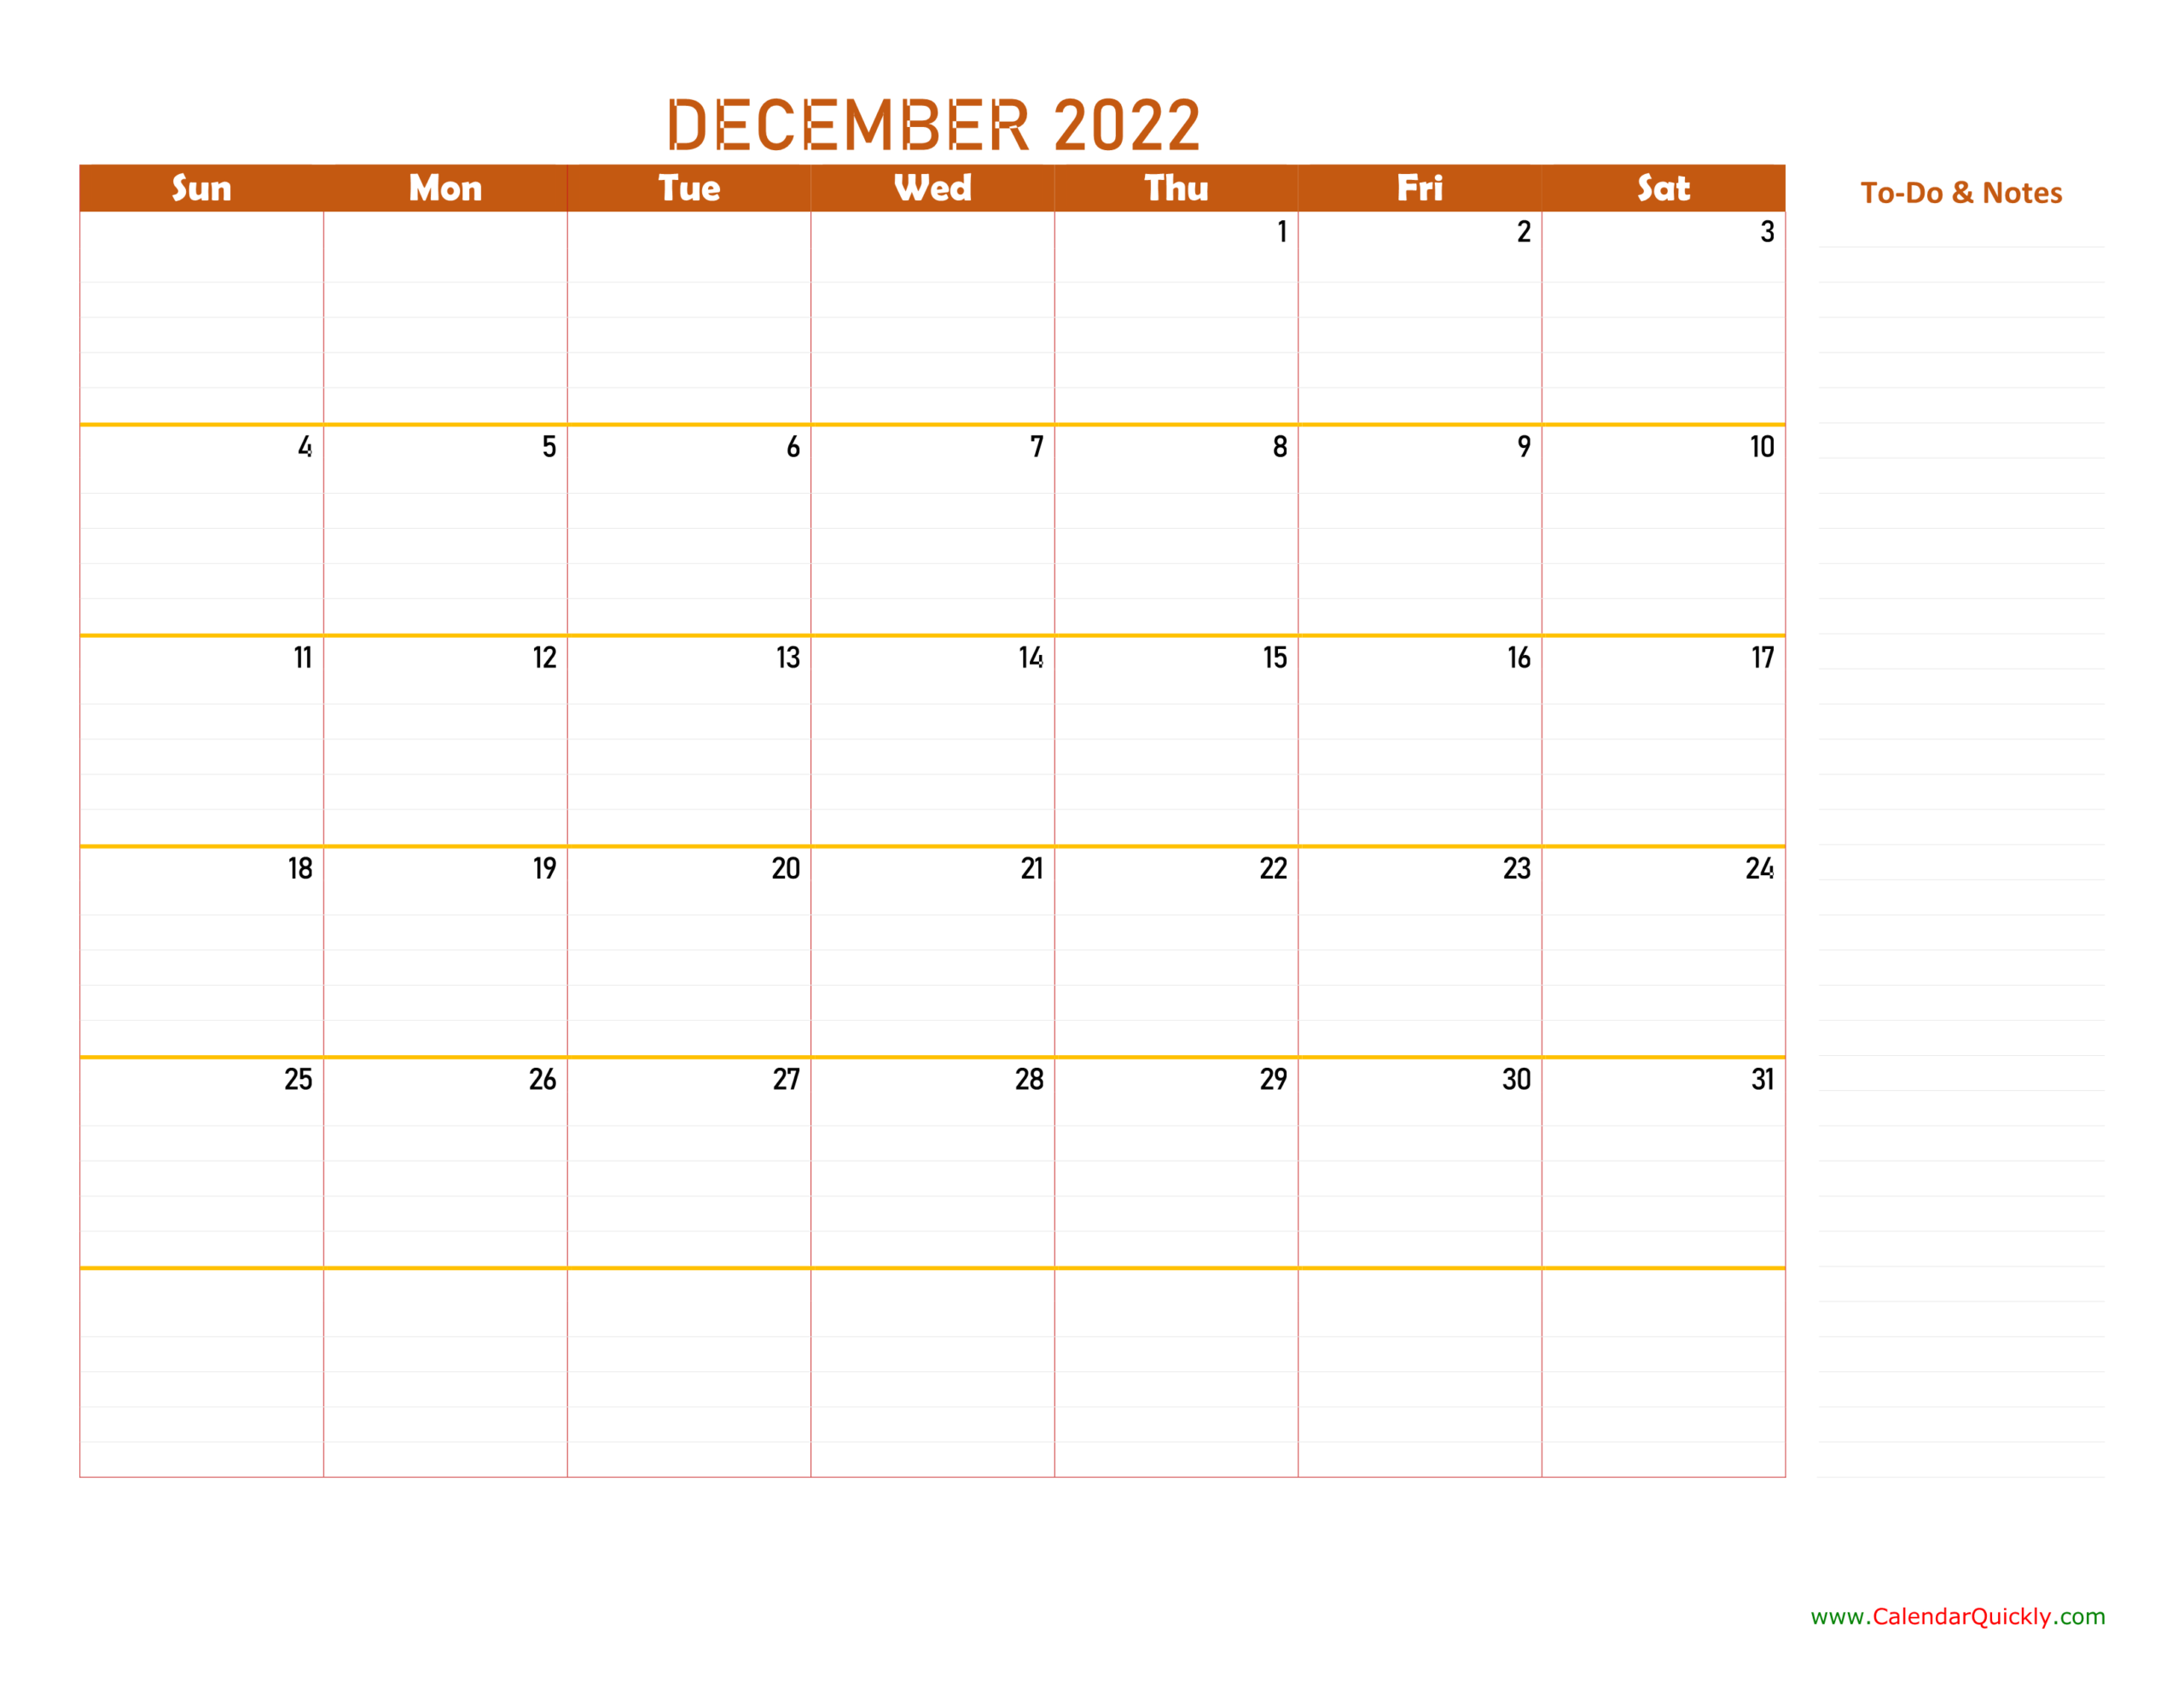 December 2022 Calendar | Calendar Quickly  Dec Jan Feb Calendar 2022